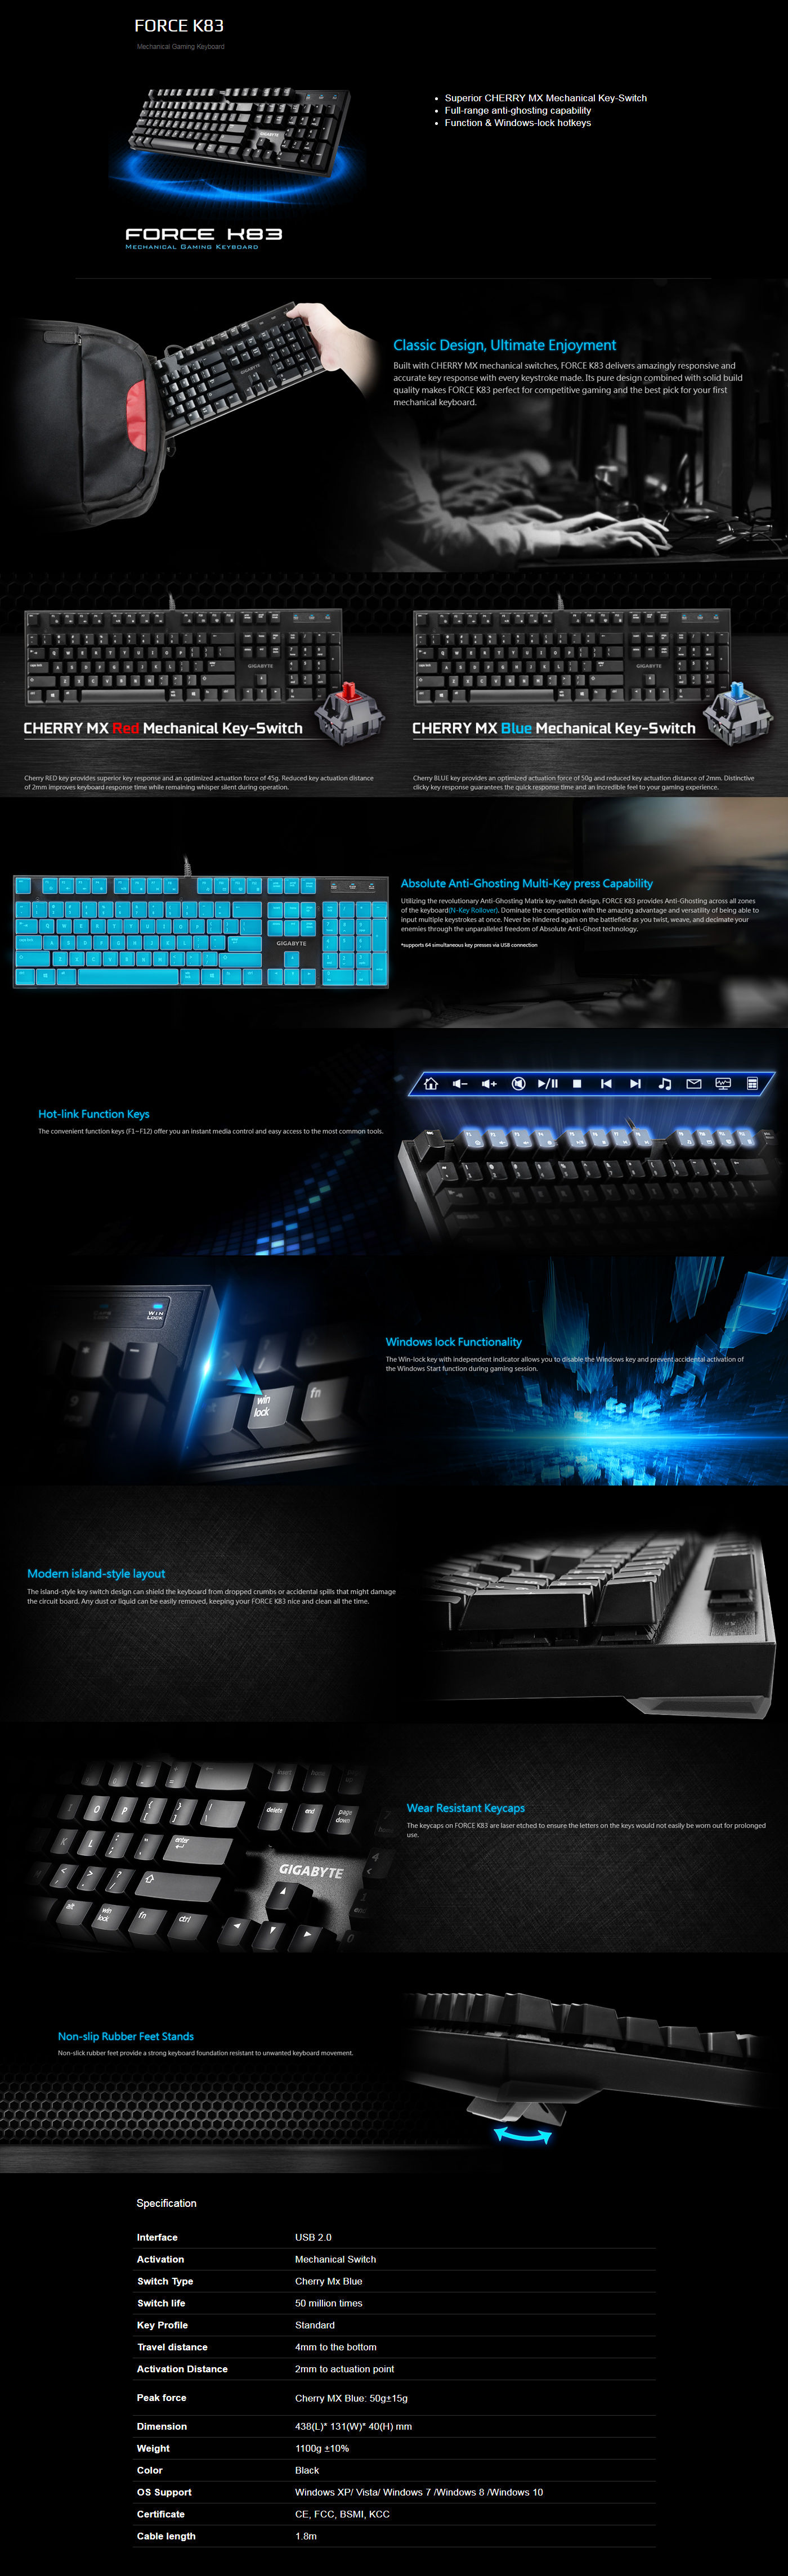  Buy Online Gigabyte Force K83 Mechanical Gaming Keyboard - Cherry MX Blue Switch